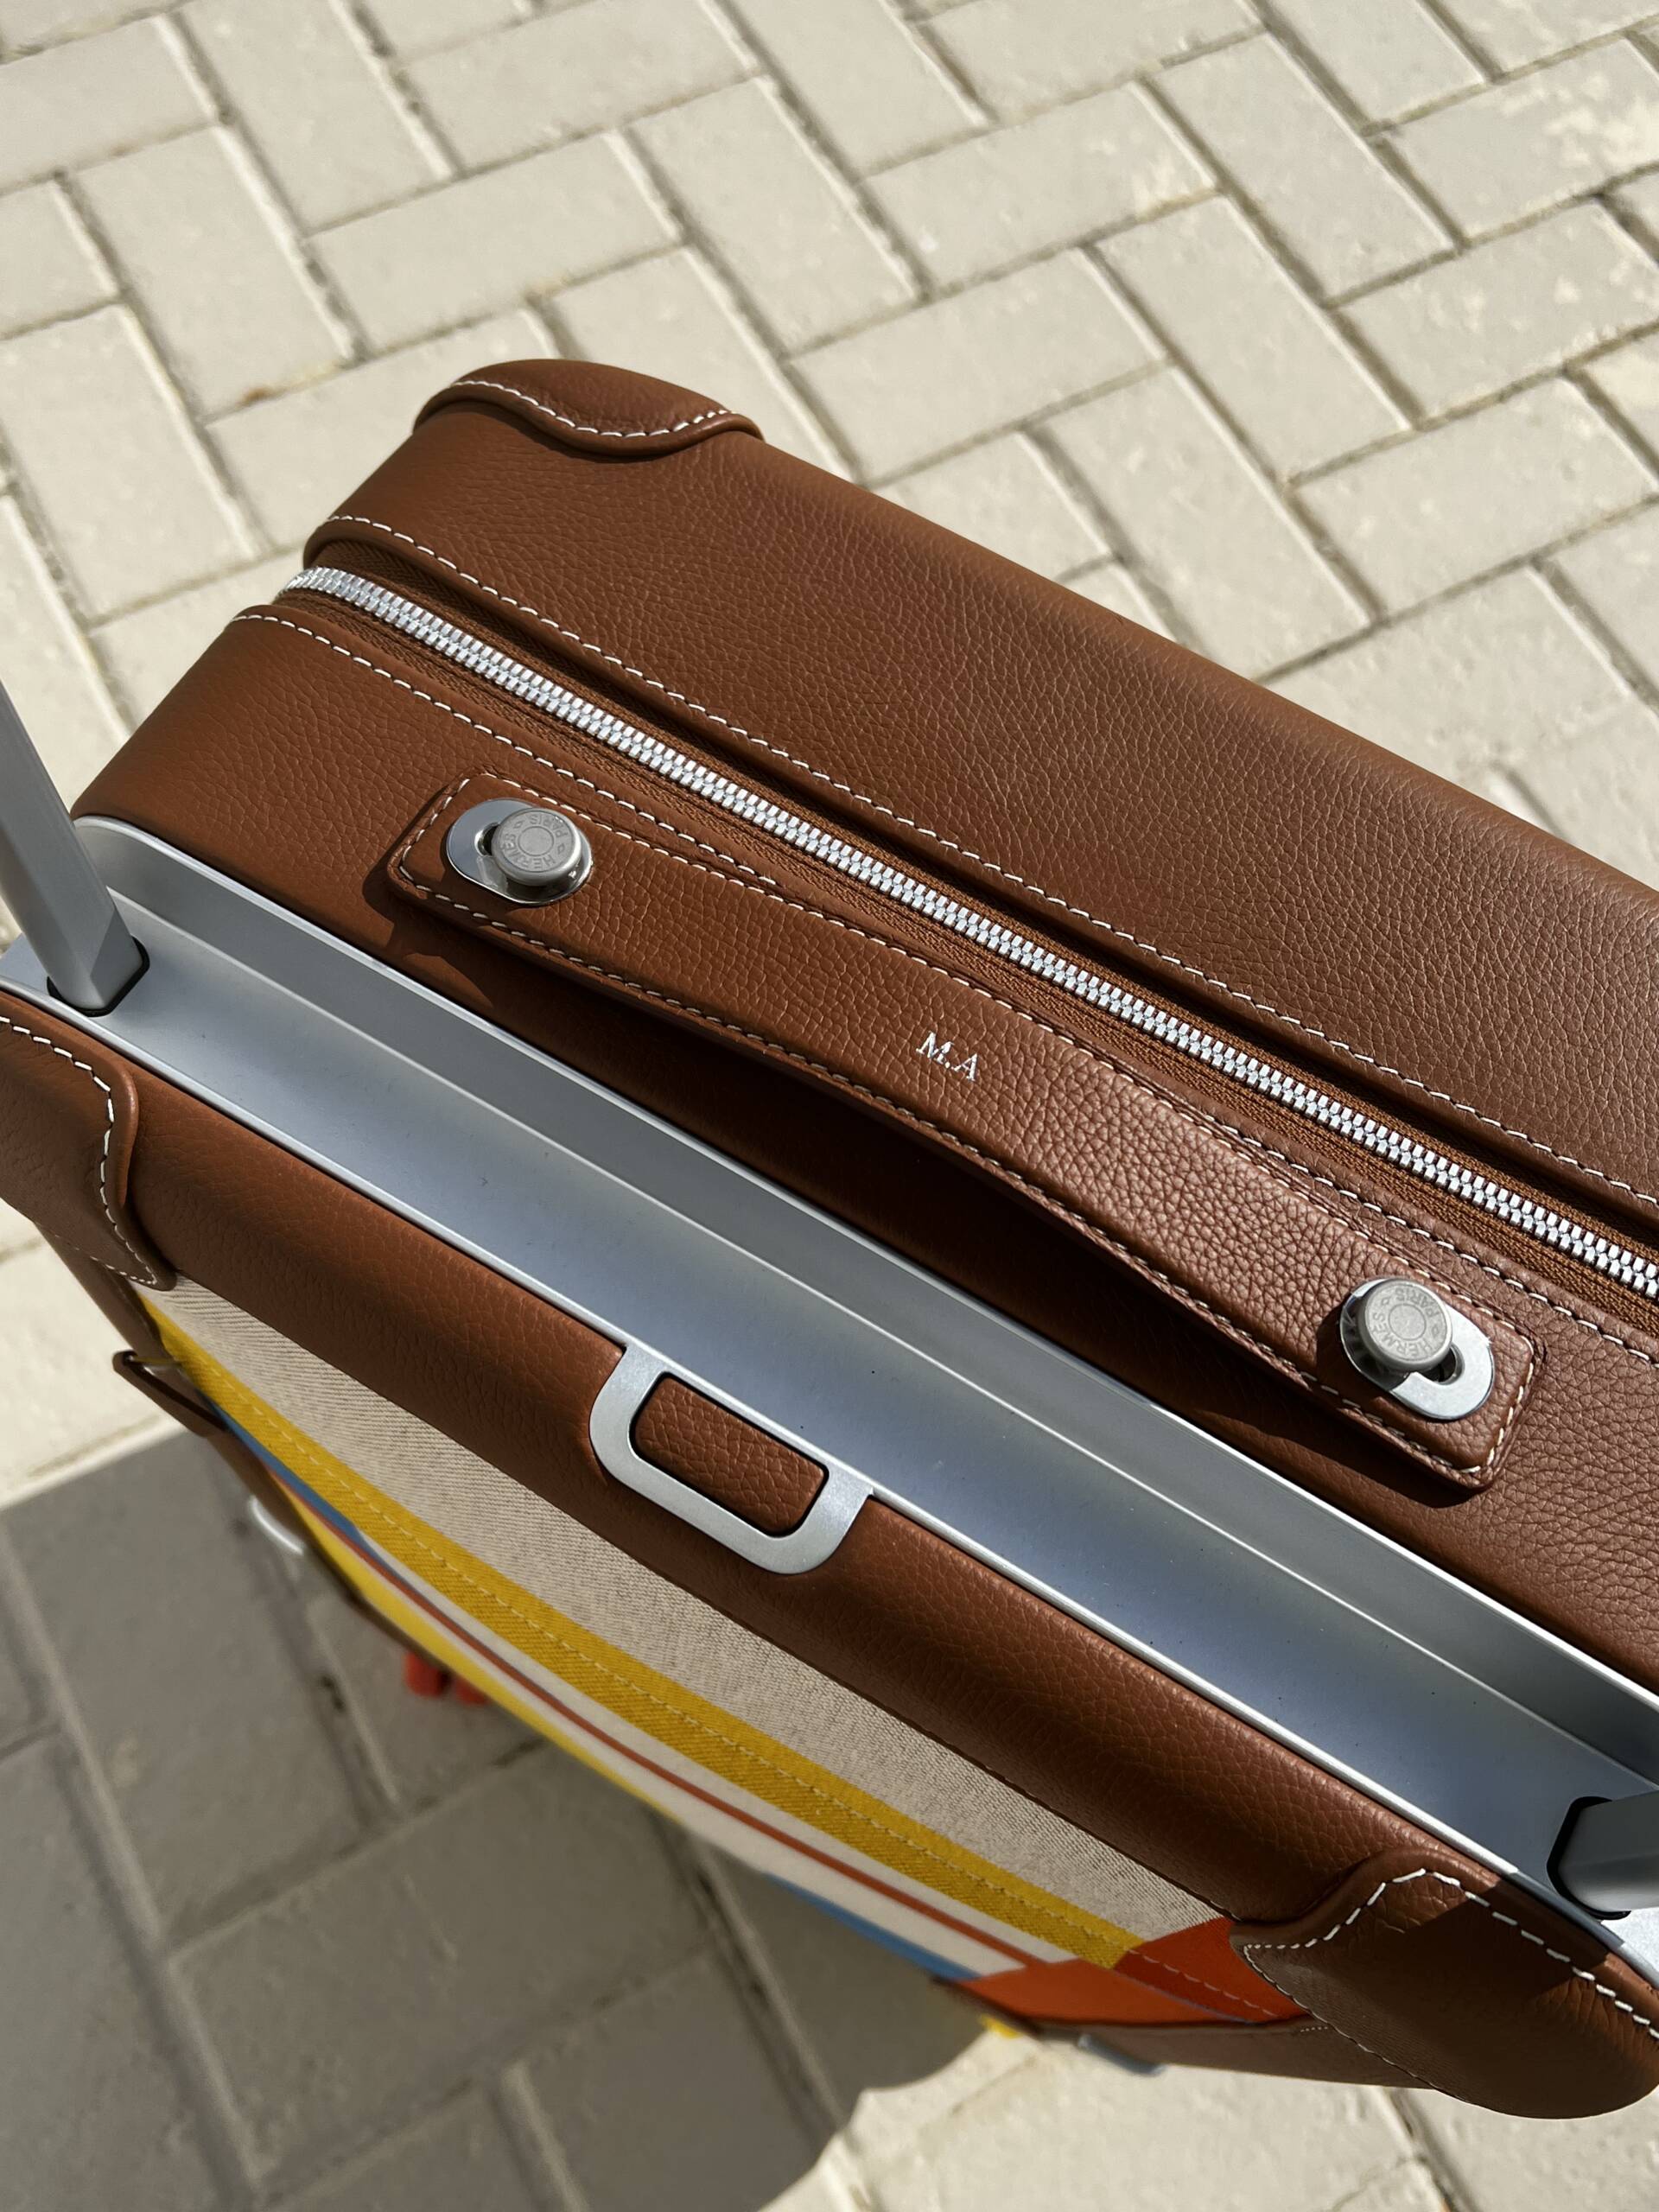 R.M.S luggage carry on Bag ✨👌🏻 #hermes #hermesrms